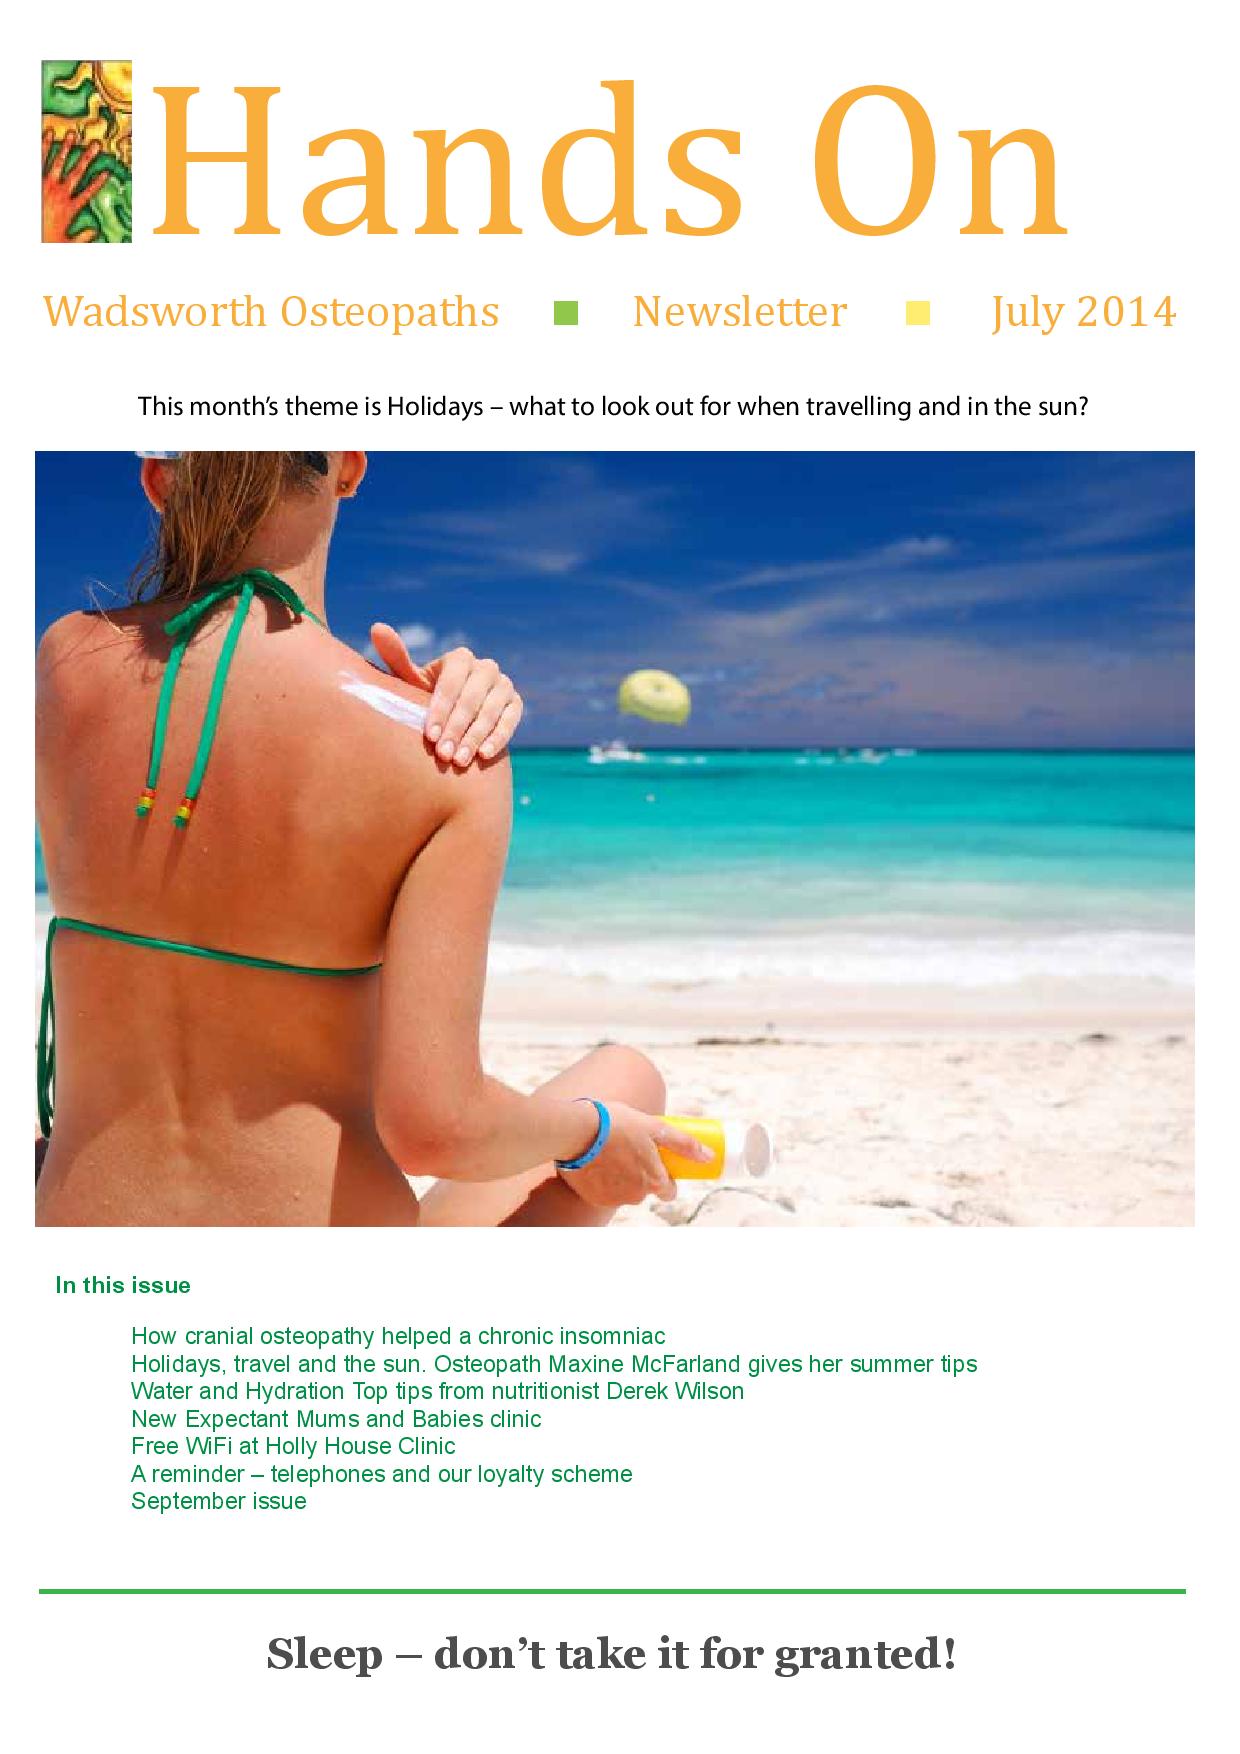 Wadsworth Osteopaths - holidays newsletter